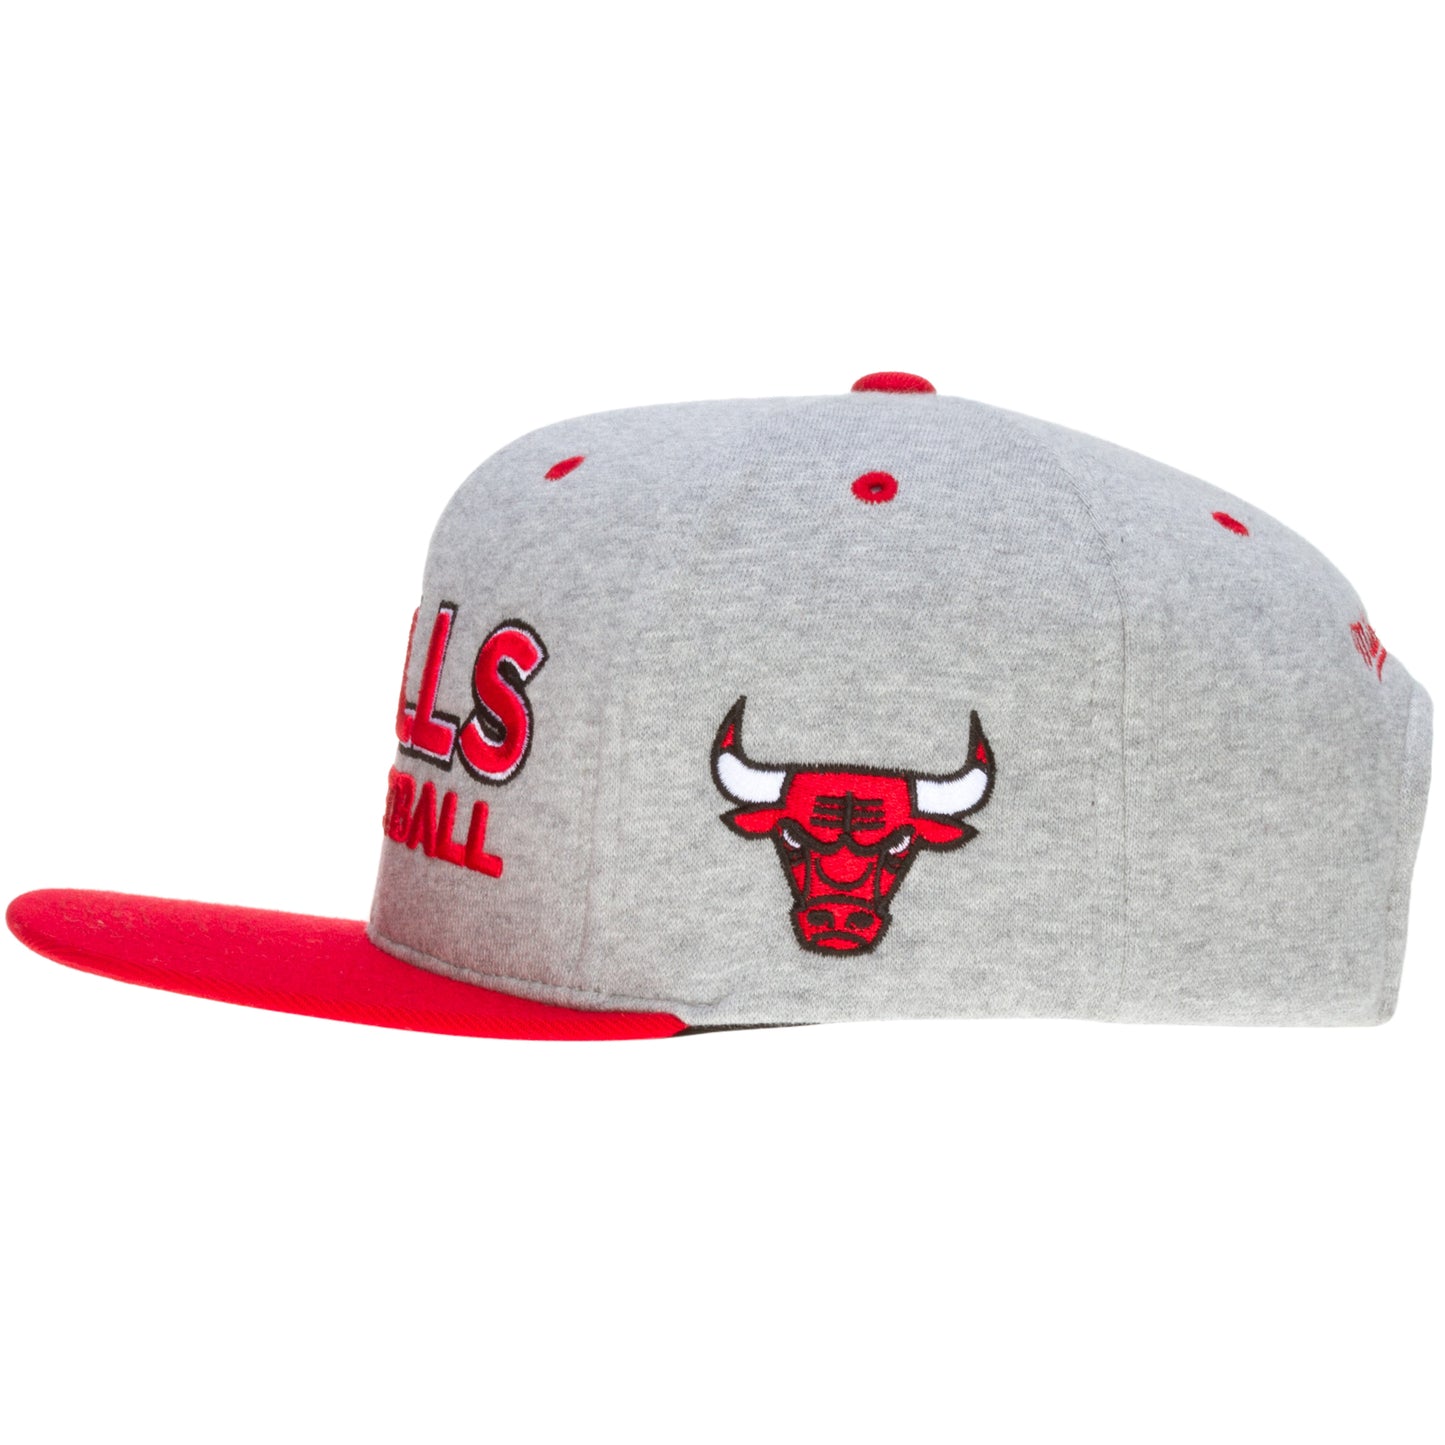 Chicago Bulls Grey and Red "Bulls Basketball" Snapback